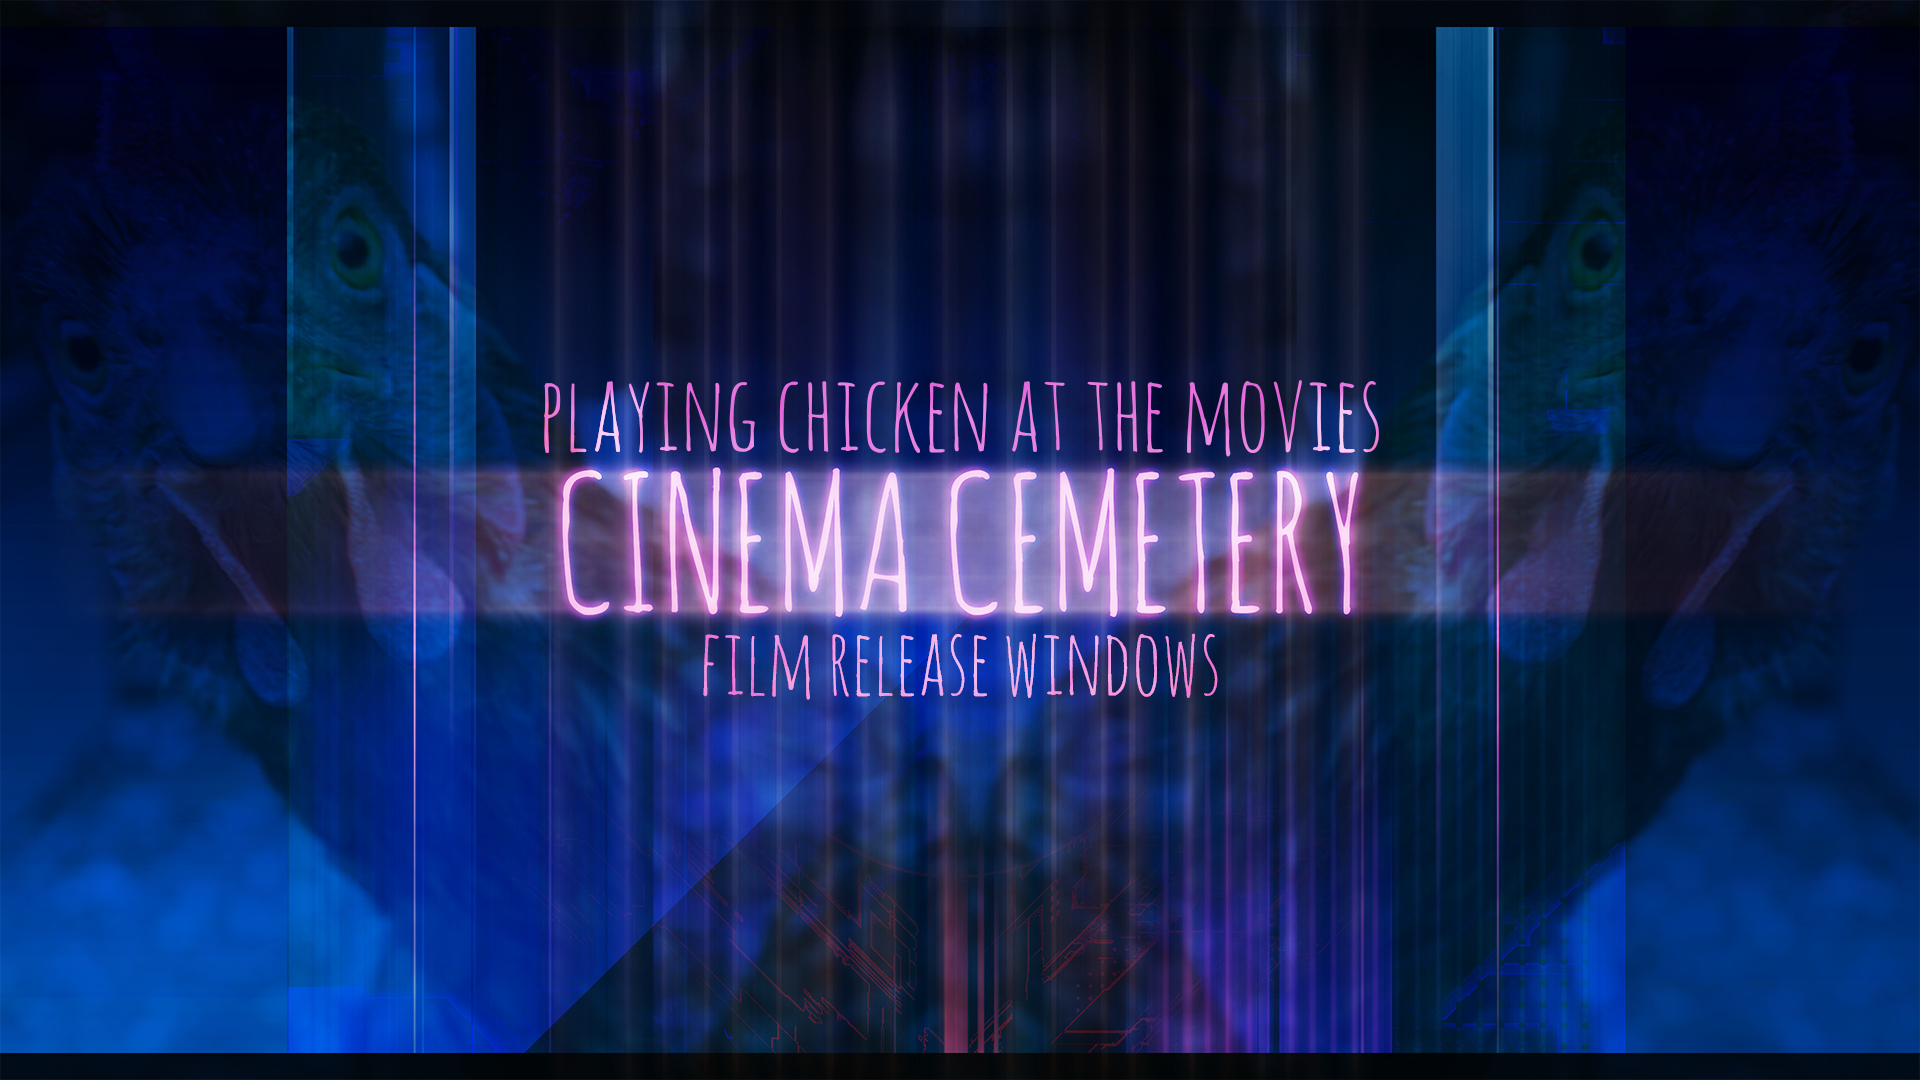 Film Release Windows